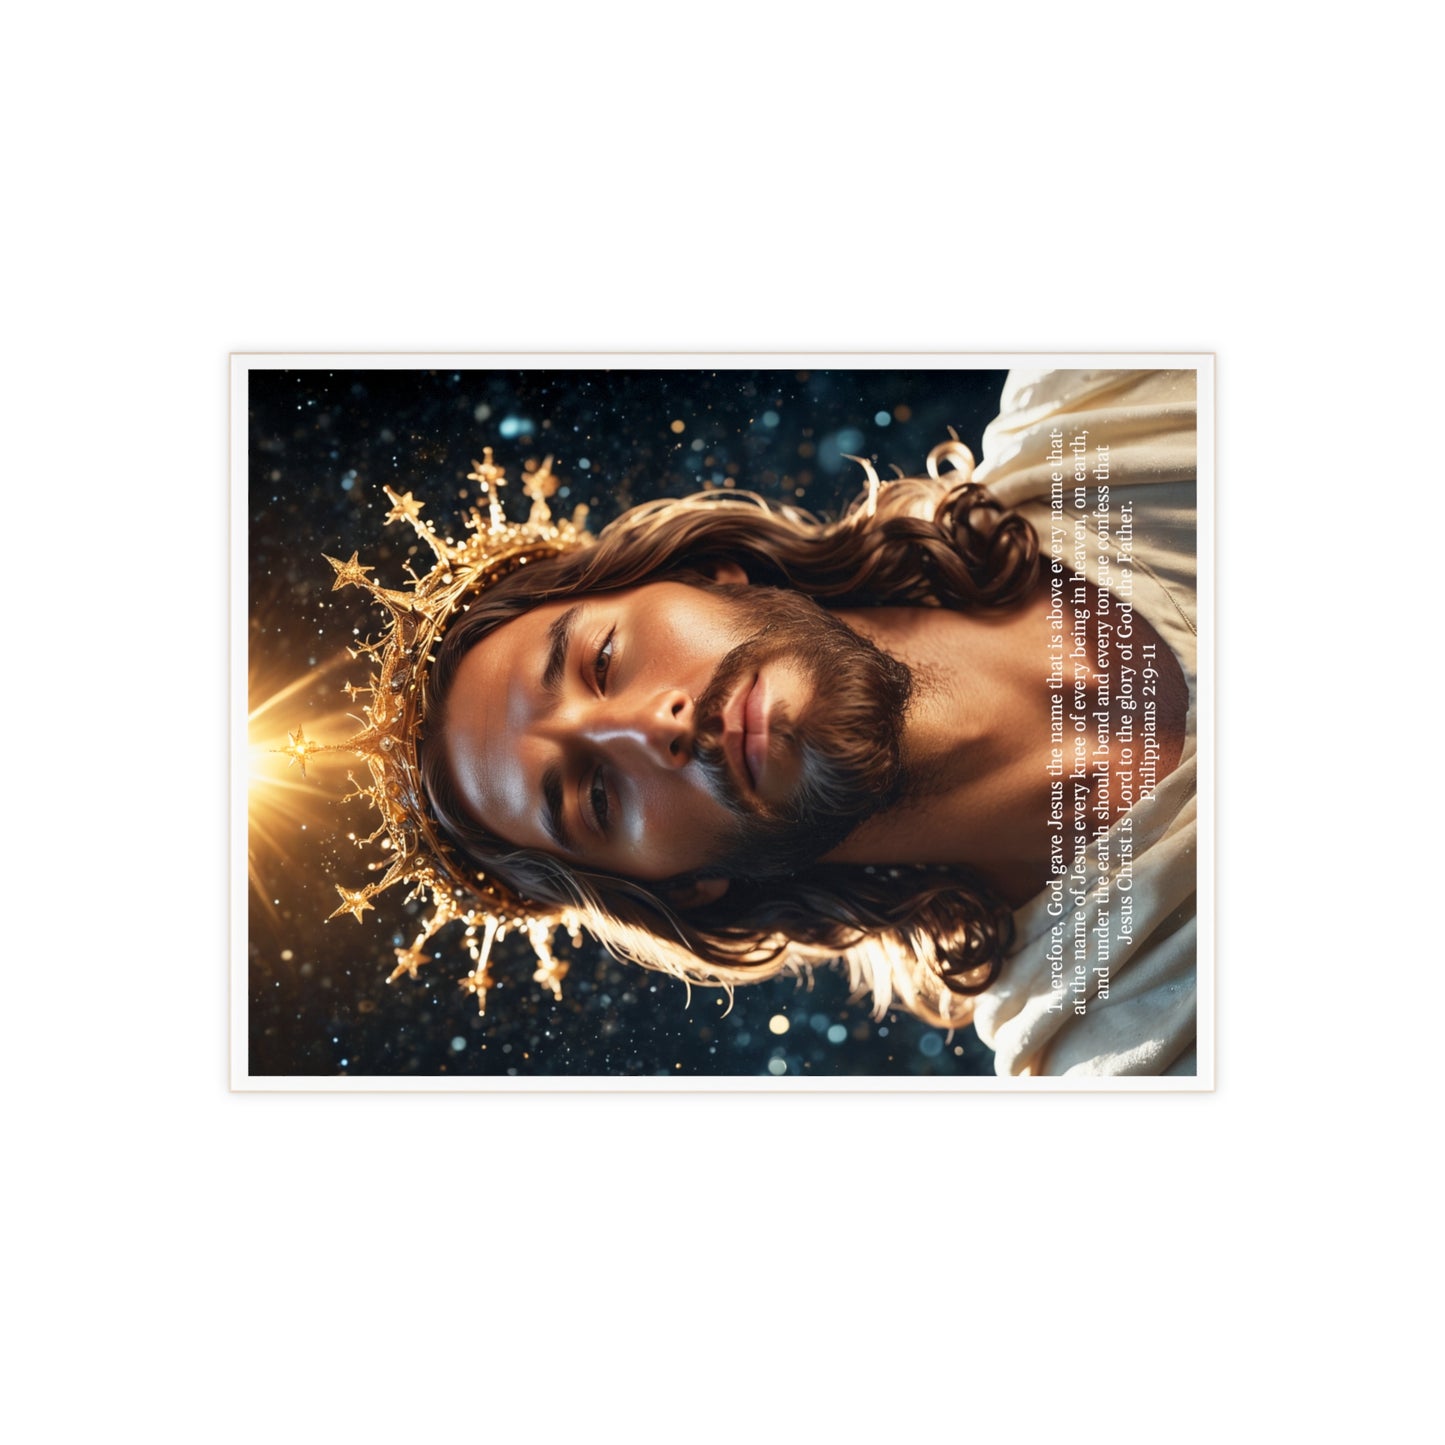 "Jesus Christ is Lord" Ceramic Photo Tile